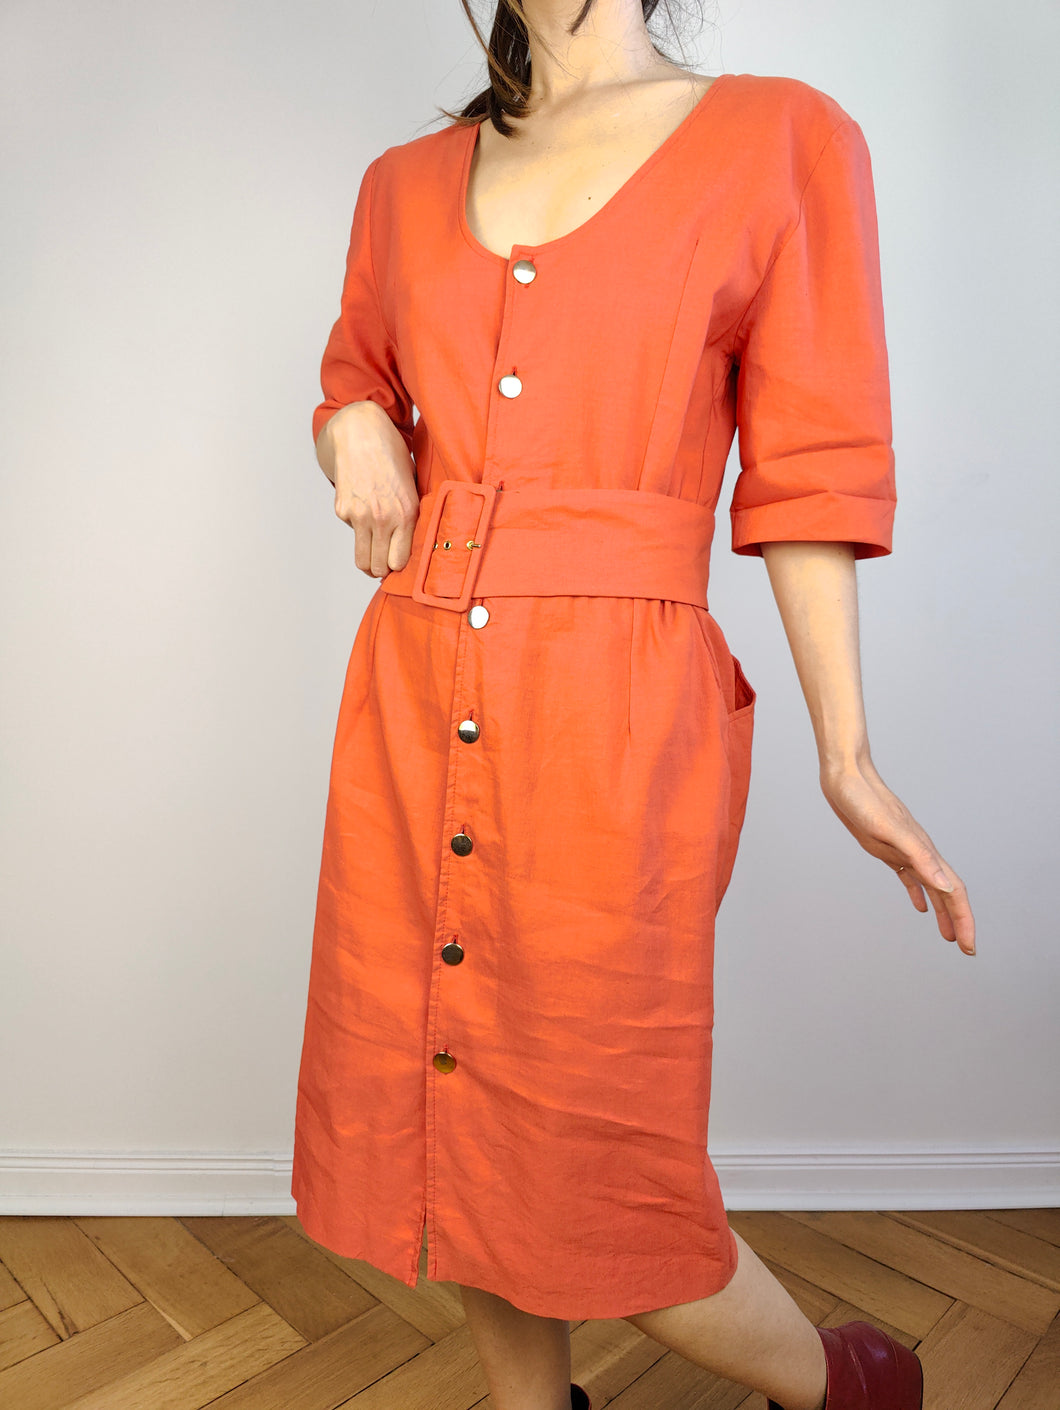 The Linen Orange Plain Belt Dress | Vintage Chiara Boni made in Italy flax linen blend spring summer midi dress M